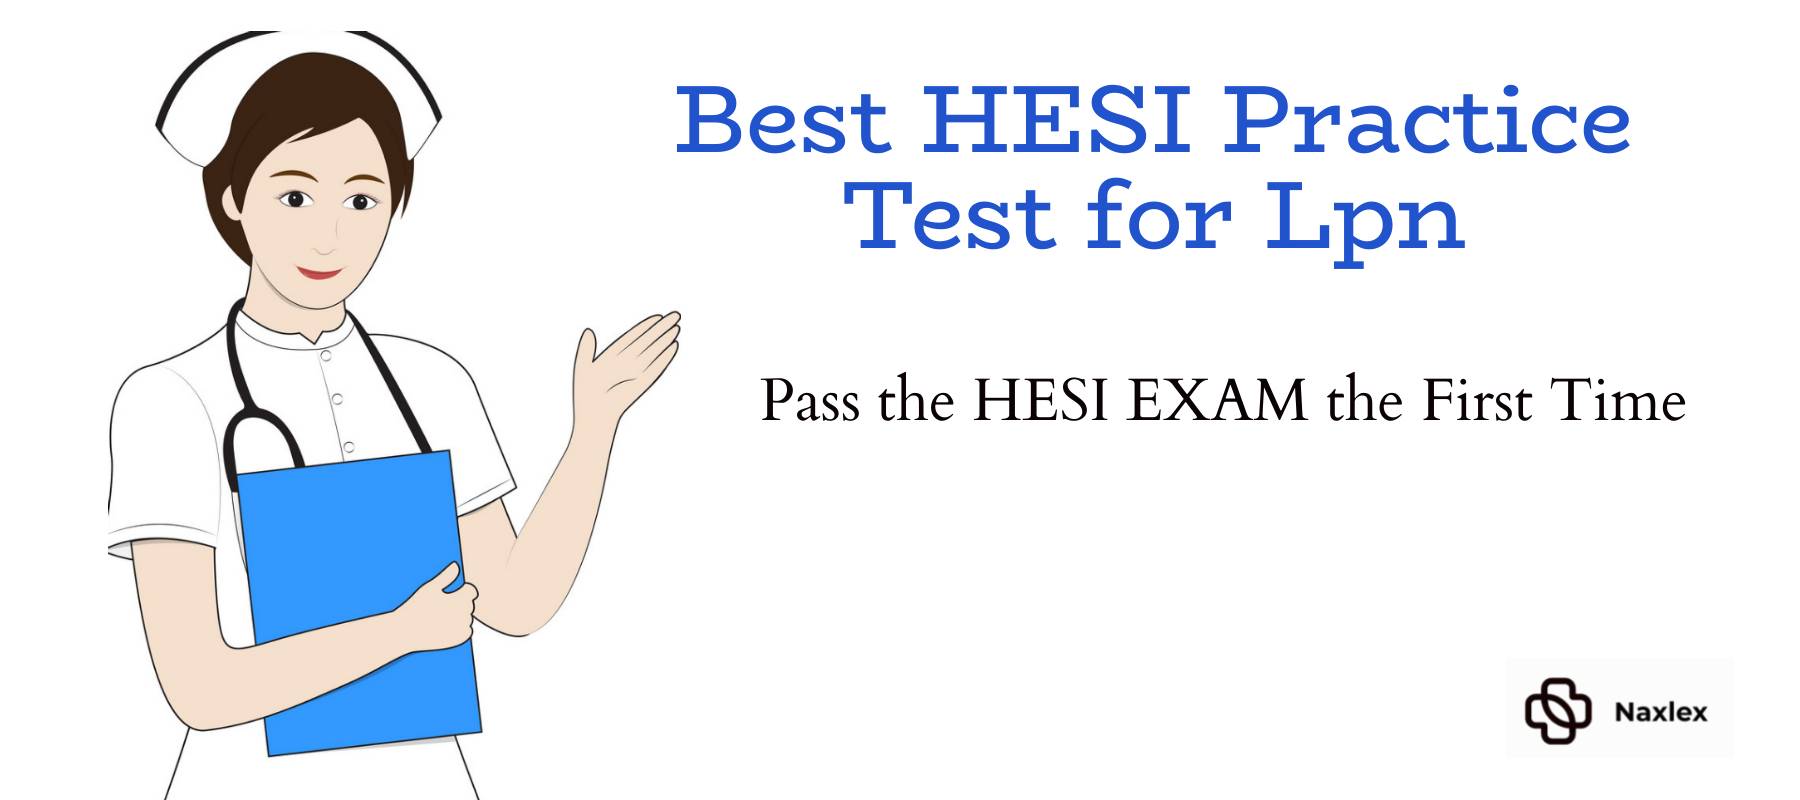 HESI Practice Test for LPN